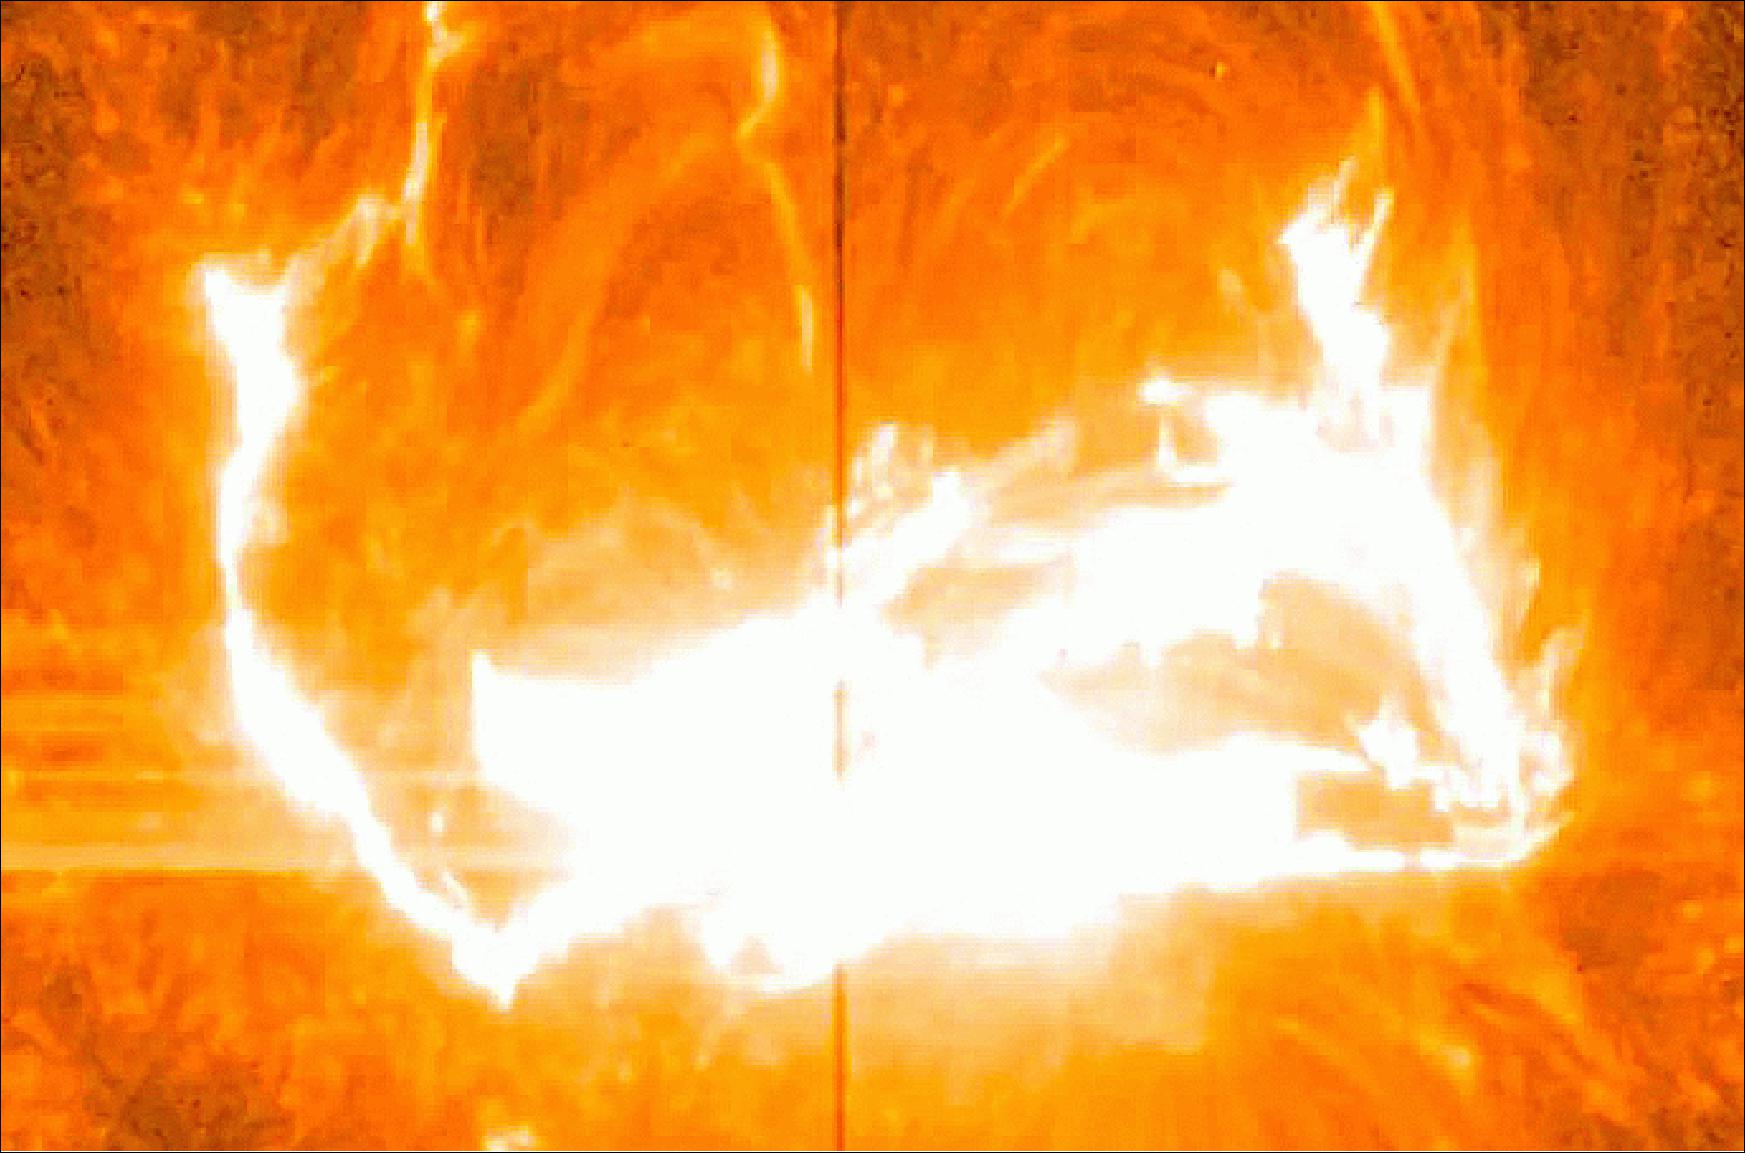 Figure 20: X1-class solar flare on March 29, 2014 as seen by NASA’s IRIS spacecraft (image credit: NASA/IRIS/SDO) 38)